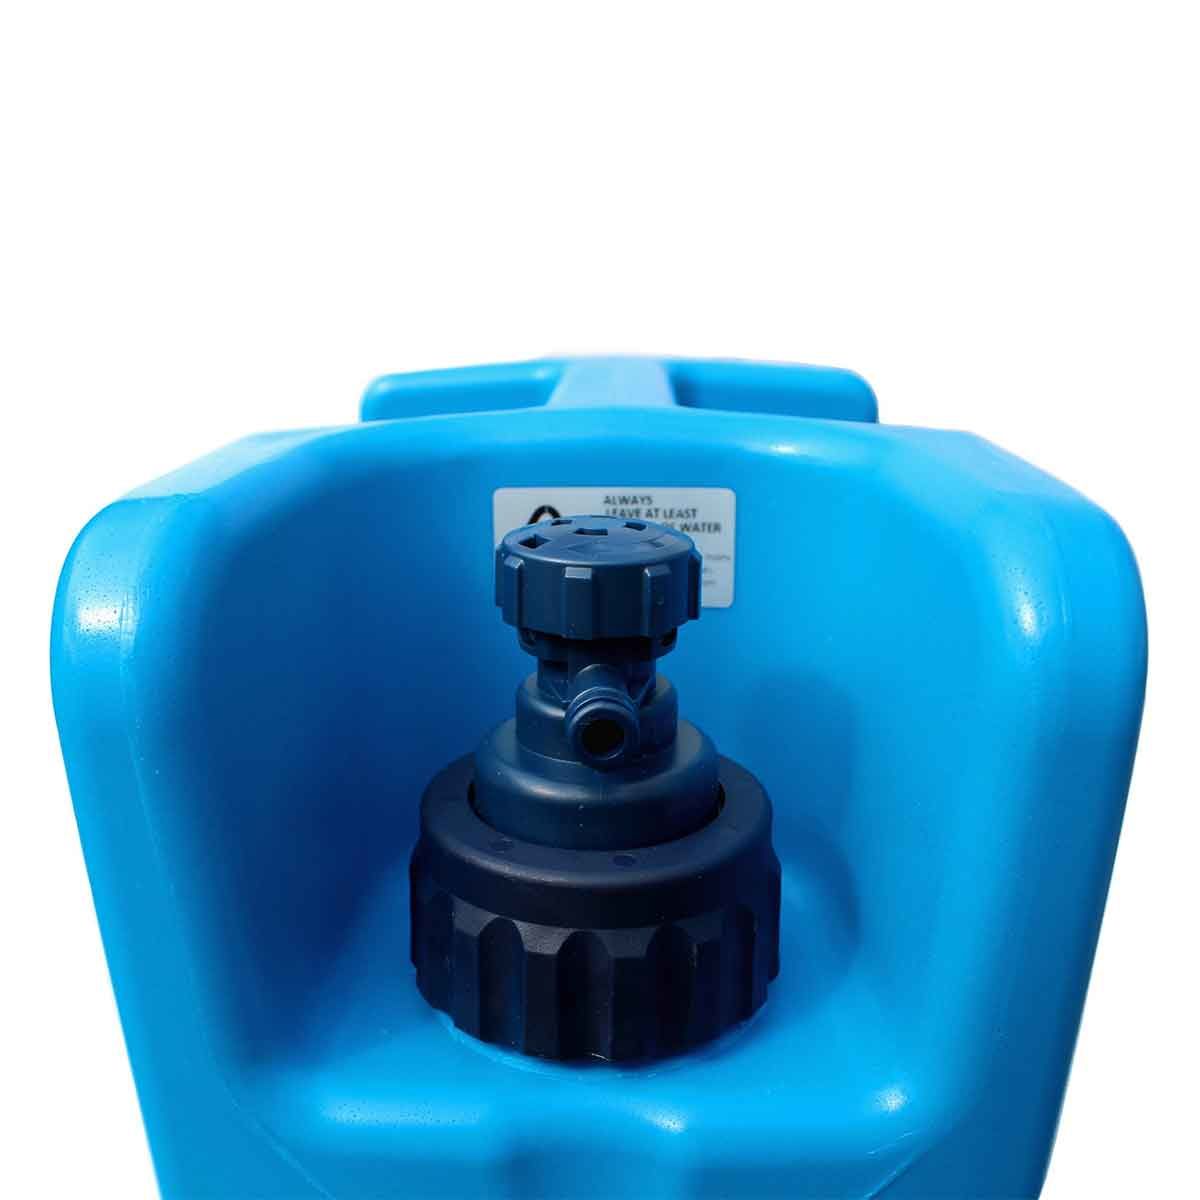 Lifesaver jerrycan de couleur bleu